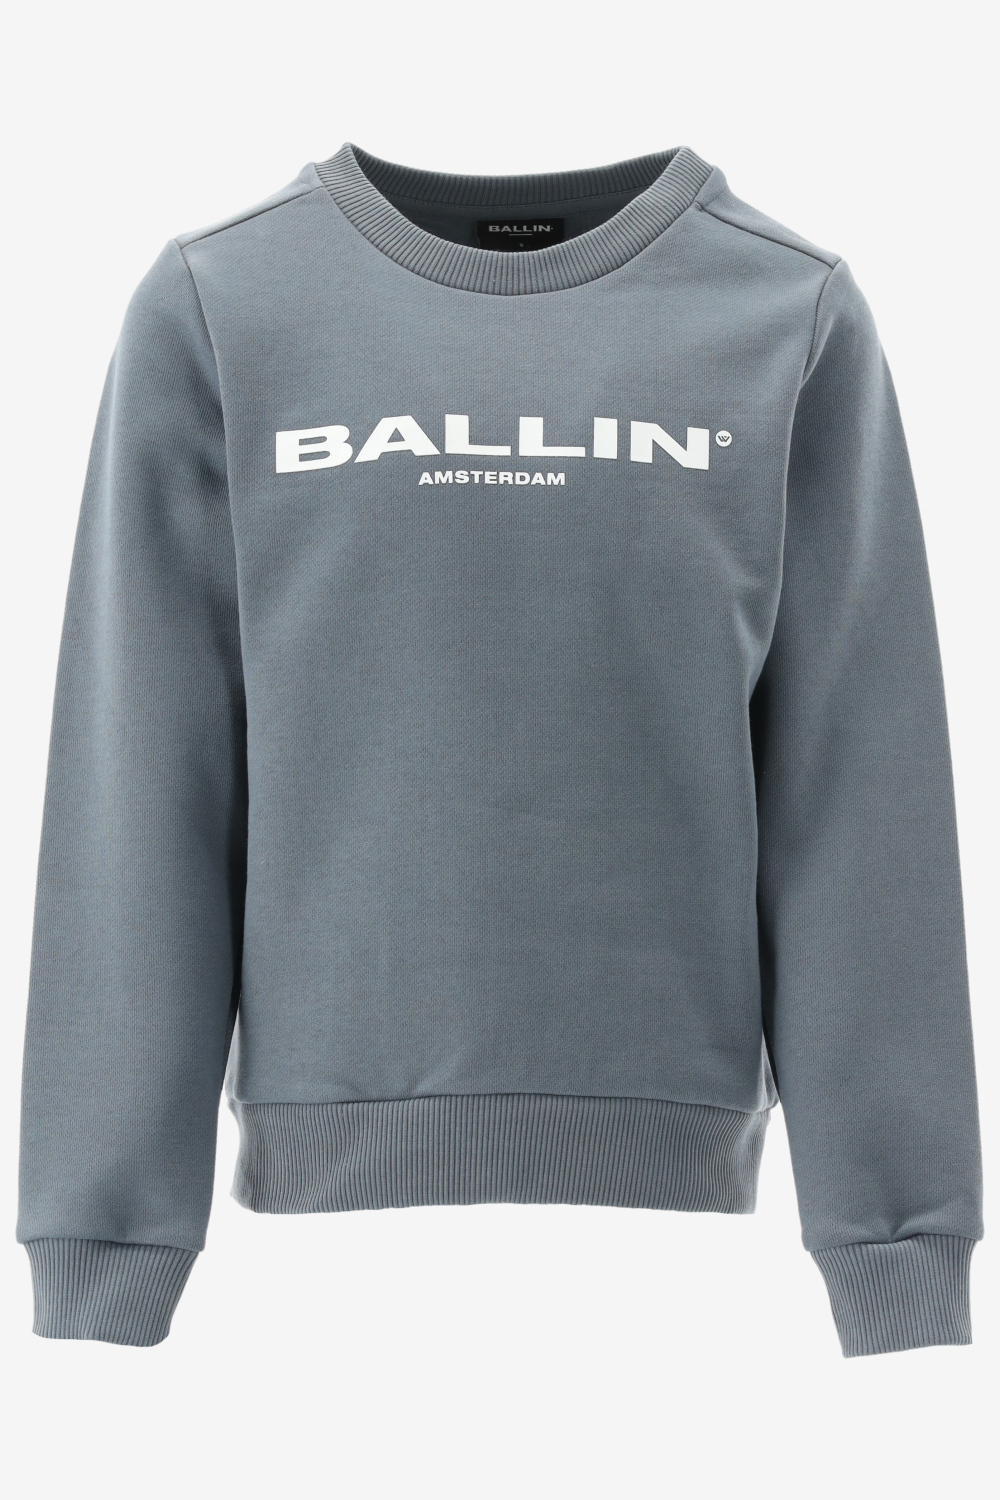 Ballin Amsterdam -  Jongens Slim Fit  Original Sweater  - Blauw - Maat 116